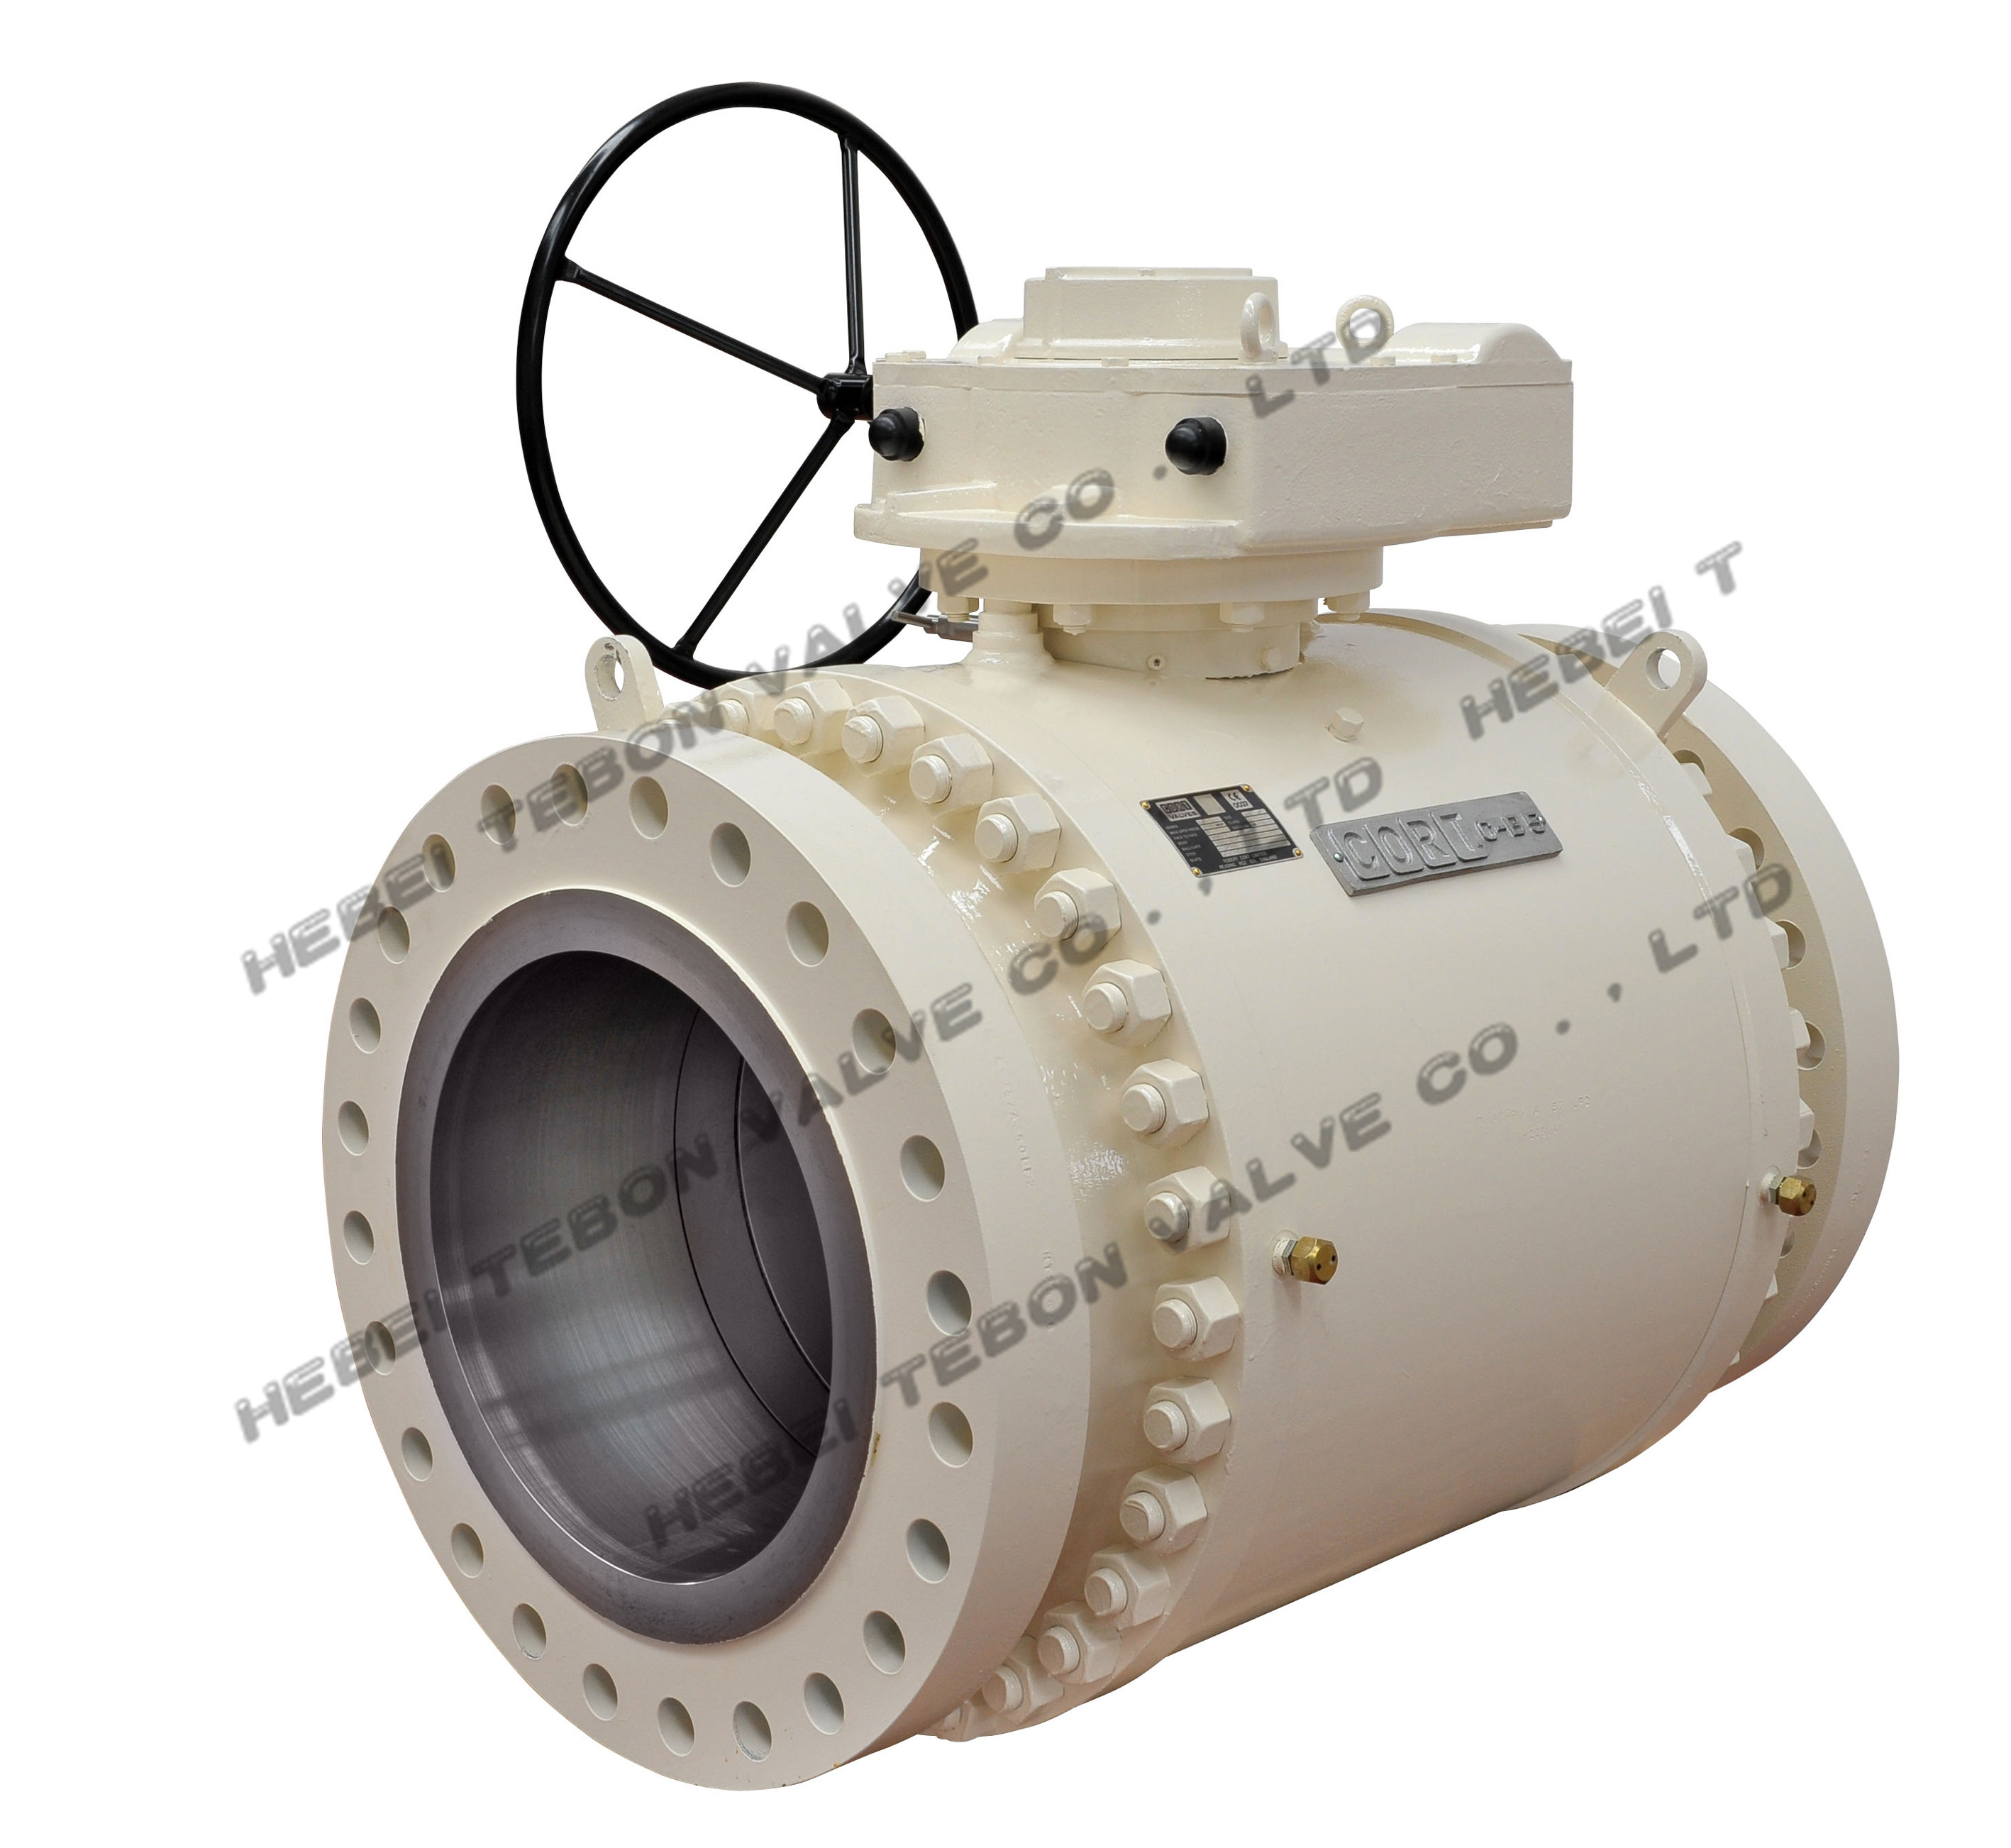 Cheap ball valve gas for sale